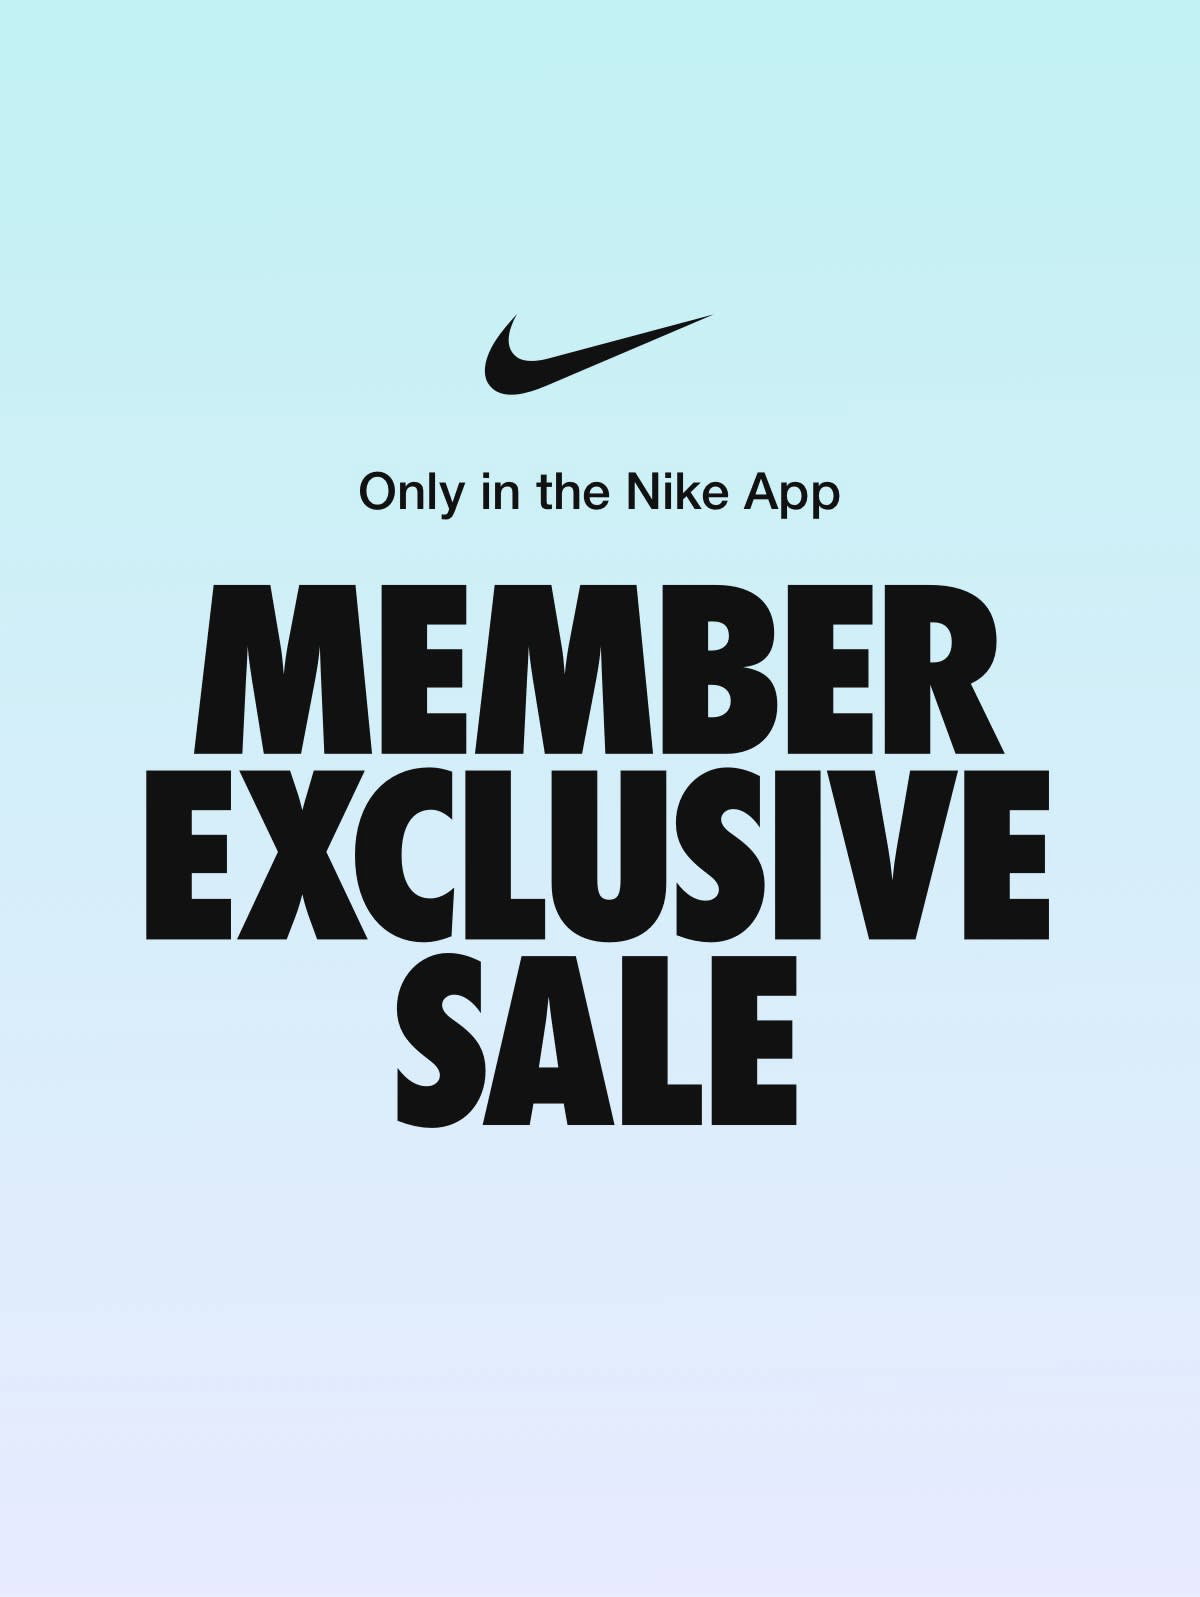 nike app sale